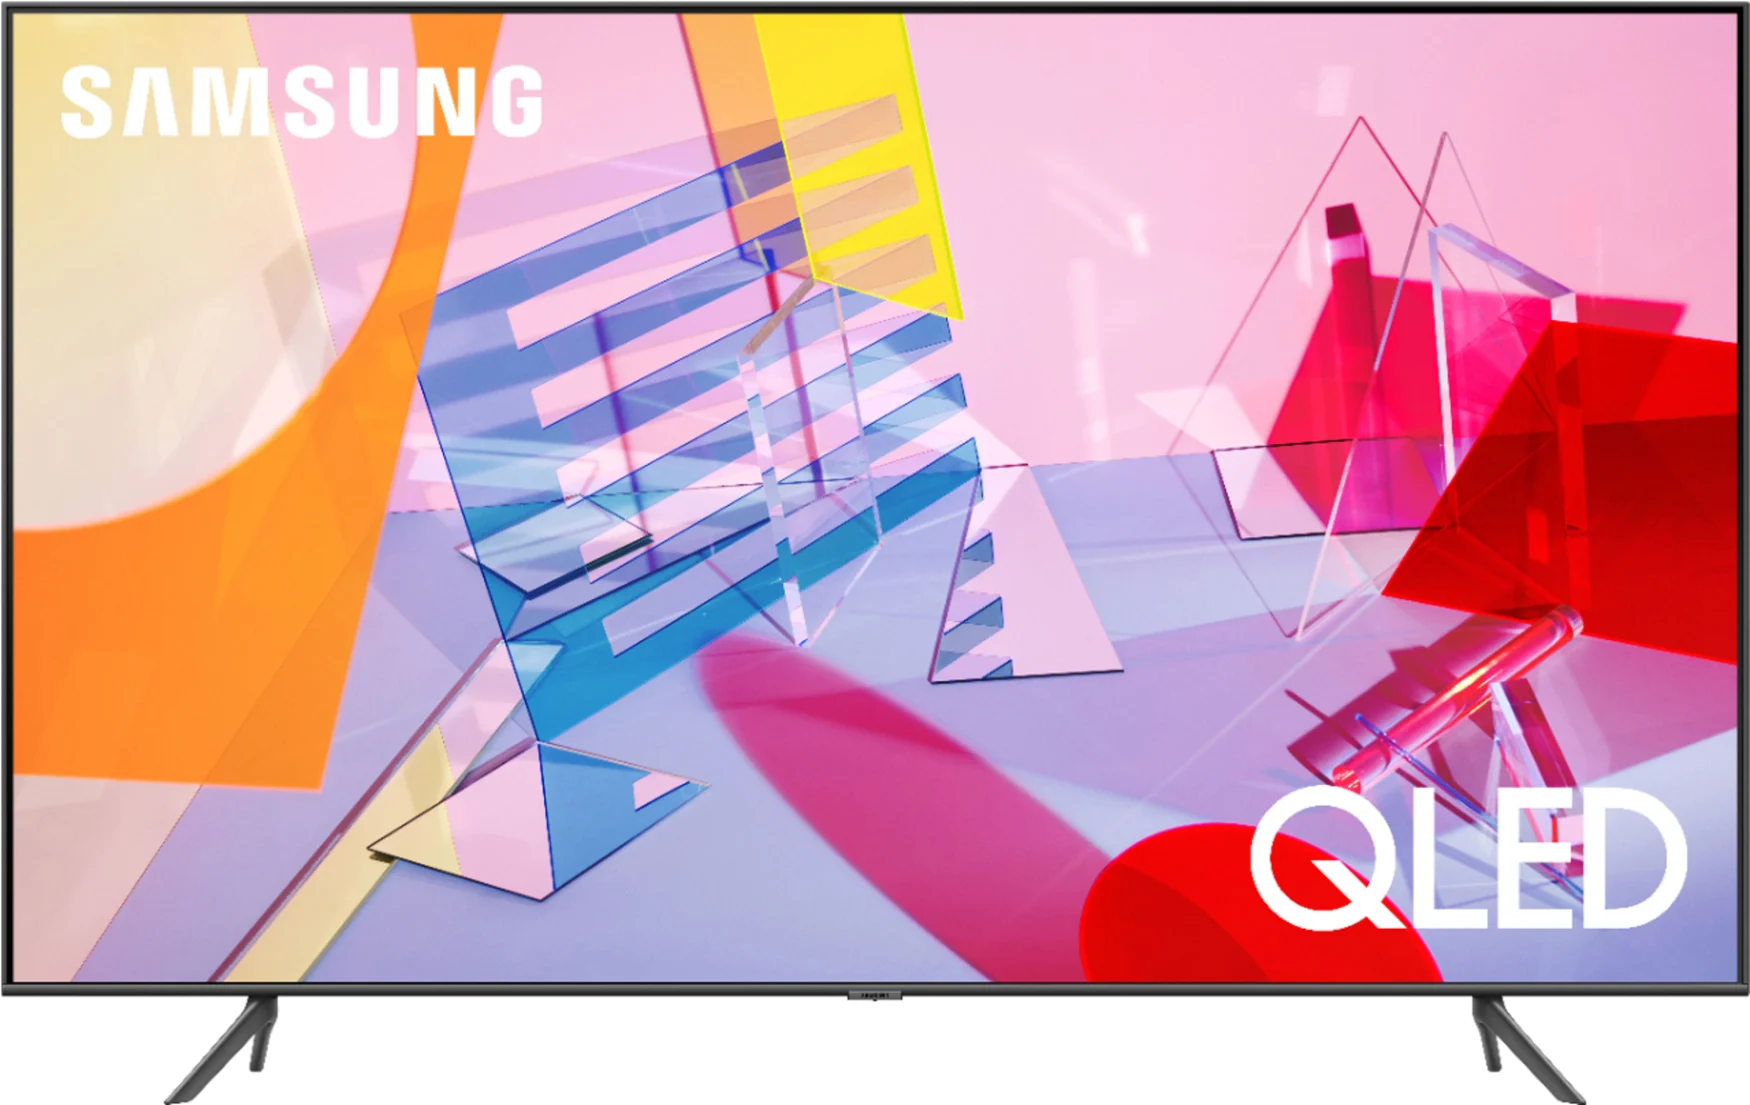 Samsung Q60T QLED smart TV